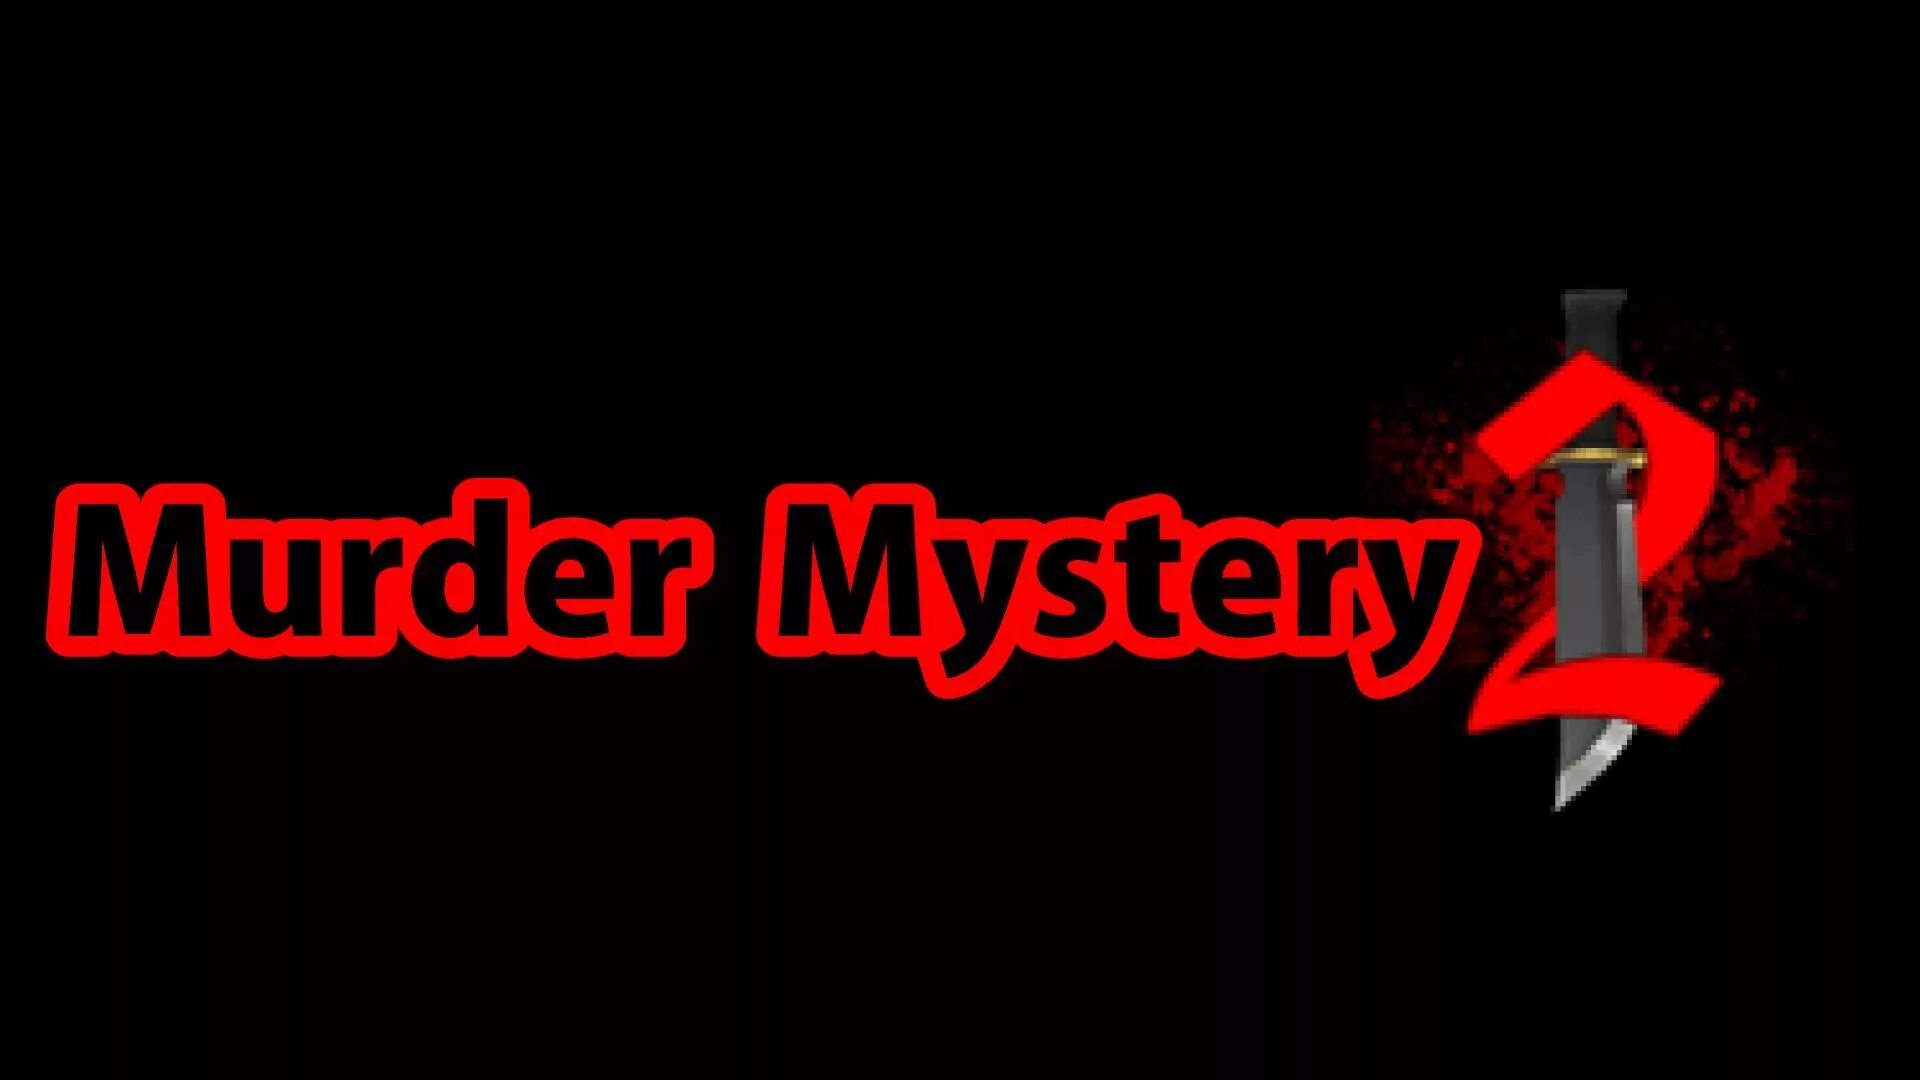 Murder Mystery 2 Roblox фон. Murder Mystery РОБЛОКС. РОБЛОКС Murder Mystery 2. Murder Mystery 2 Roblox.